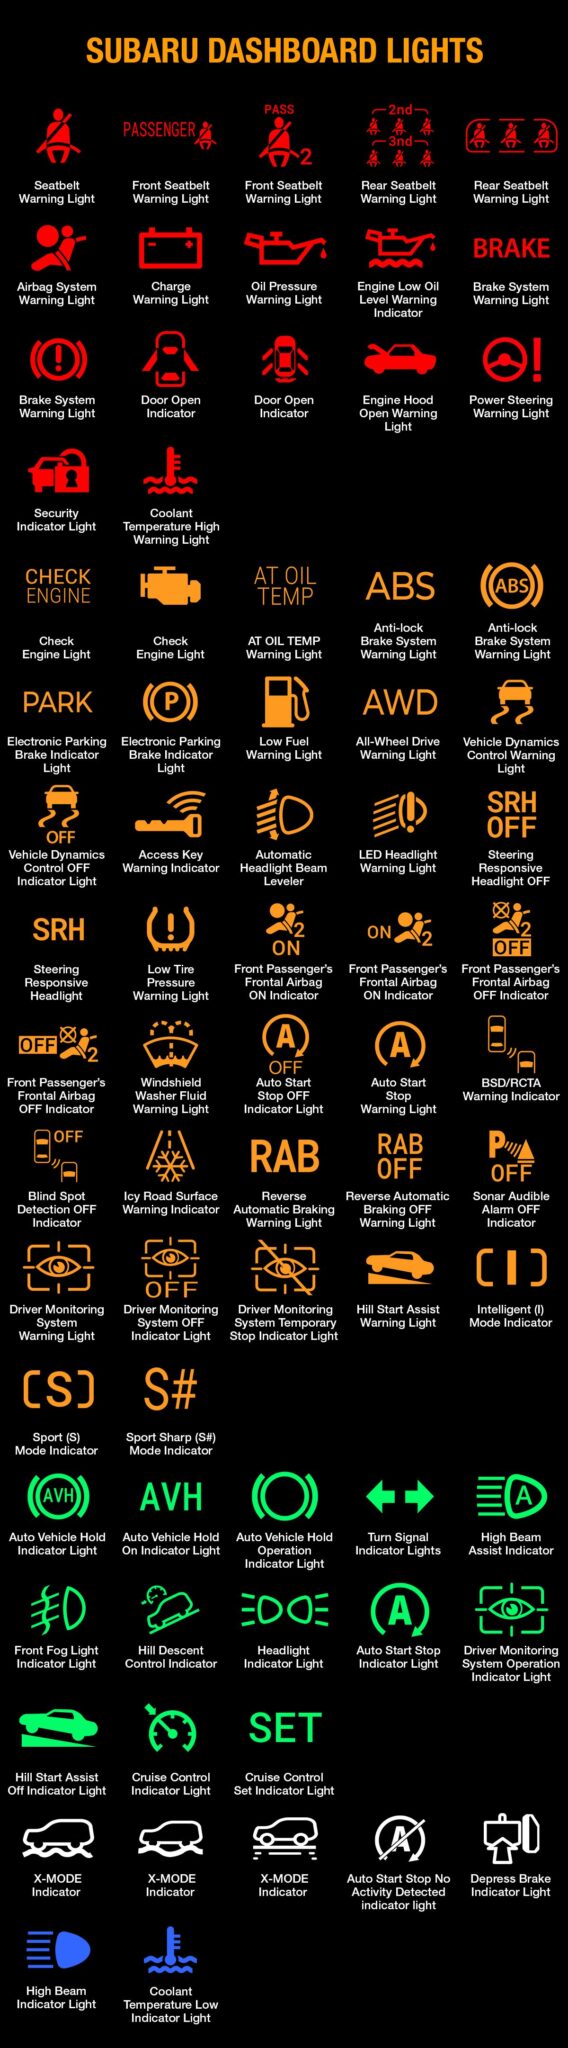 Subaru Dashboard Lights And Meanings